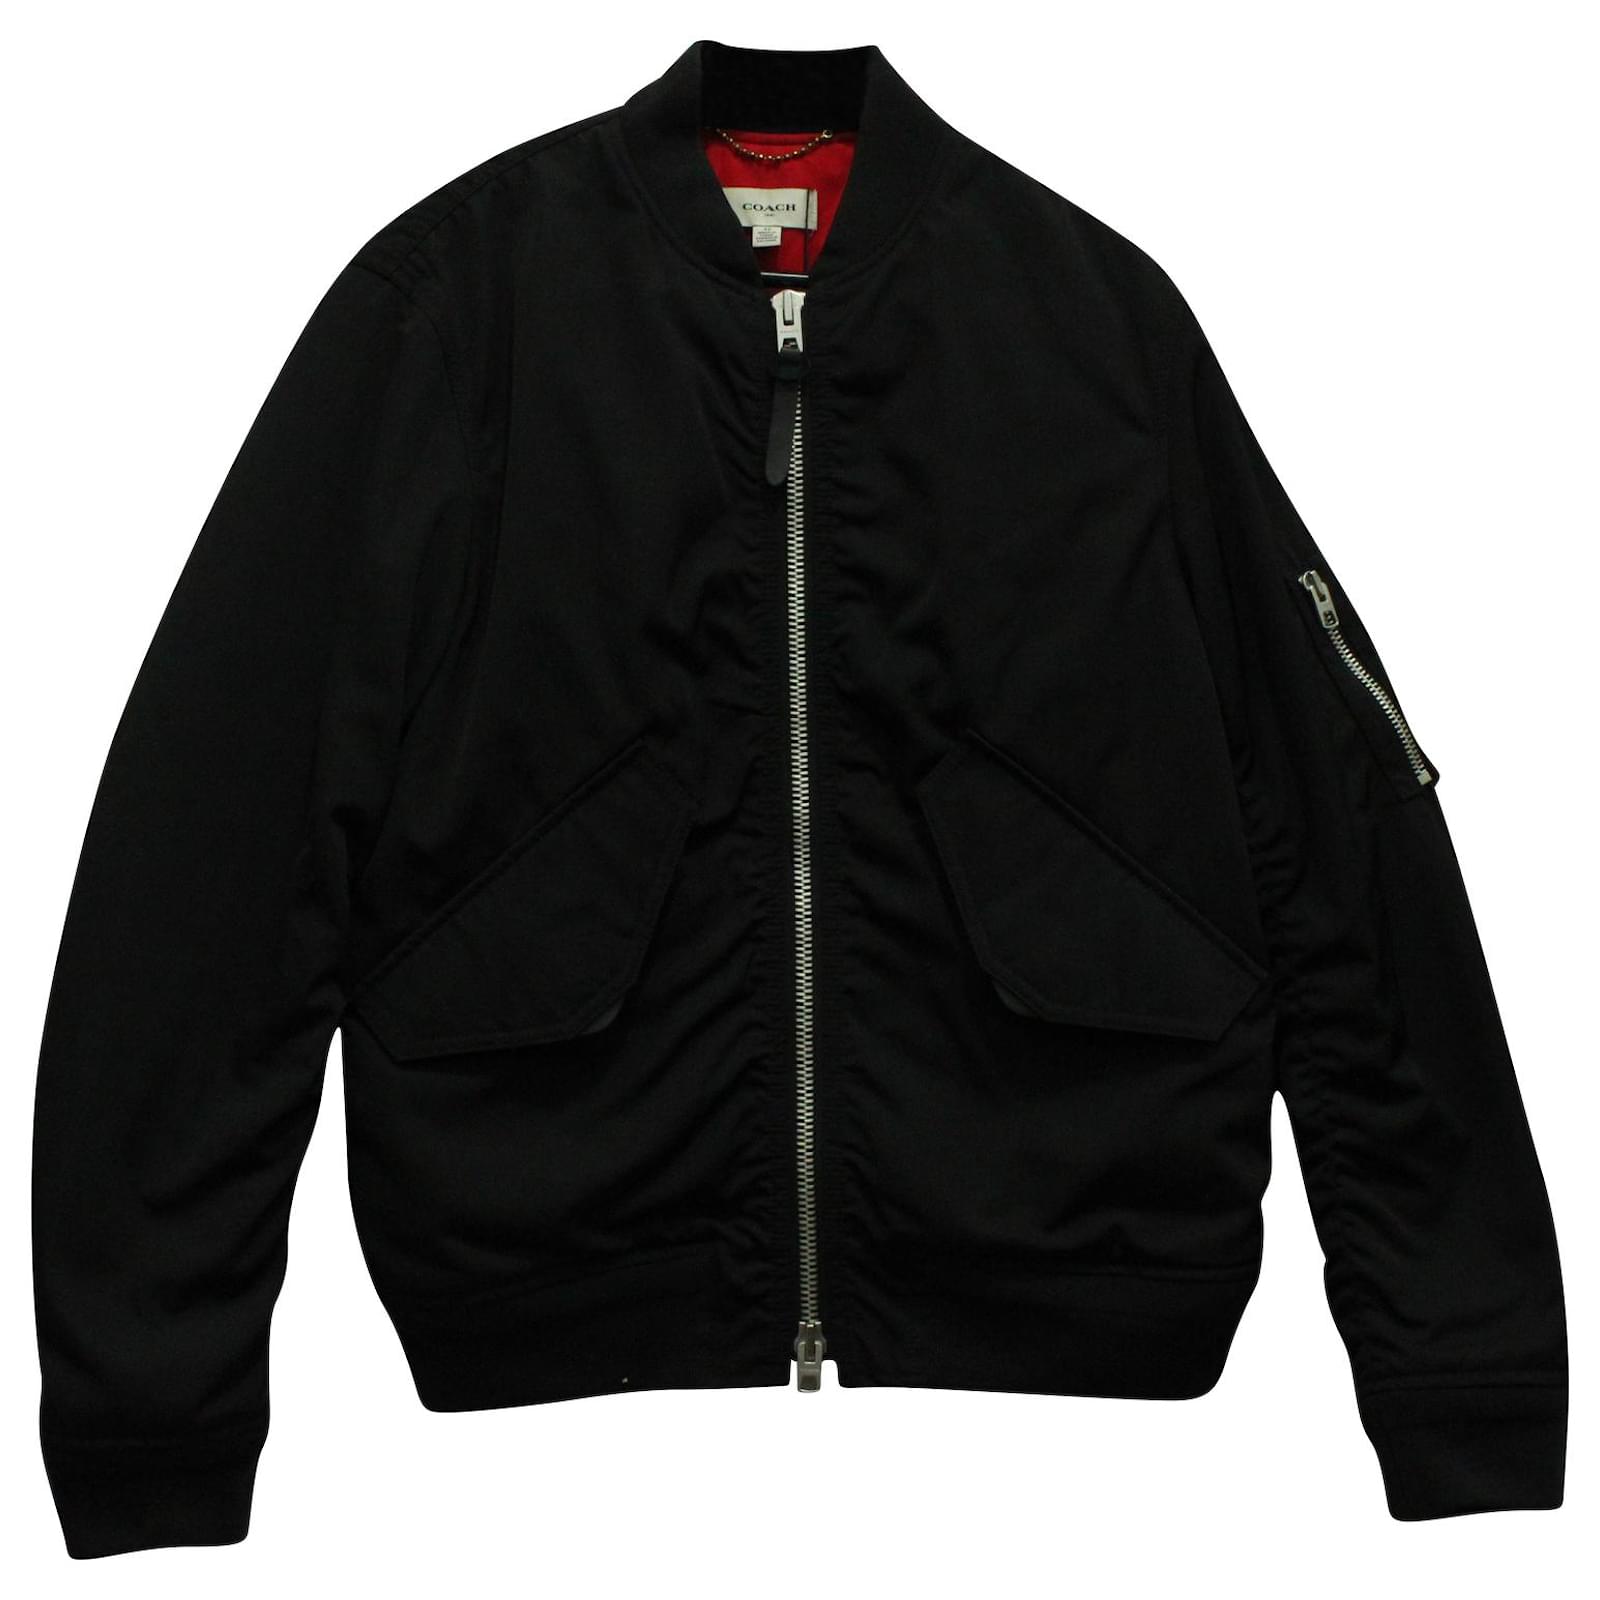 COACH Ma-1 Jacket in Black Nylon